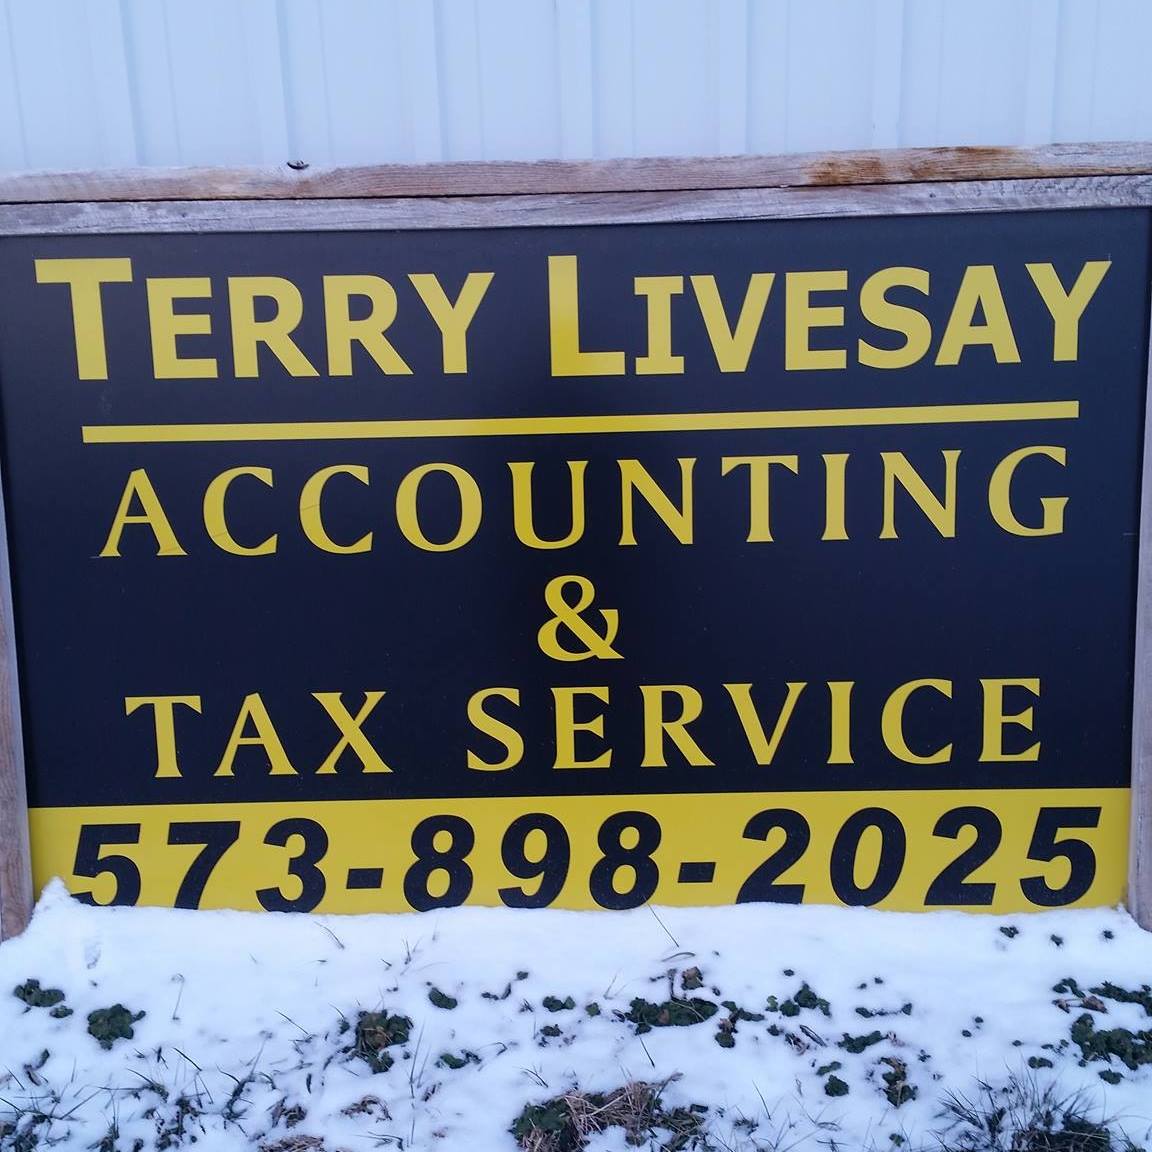 Terry Livesay Accounting & Tax Service 2482 MO-79, Elsberry Missouri 63343